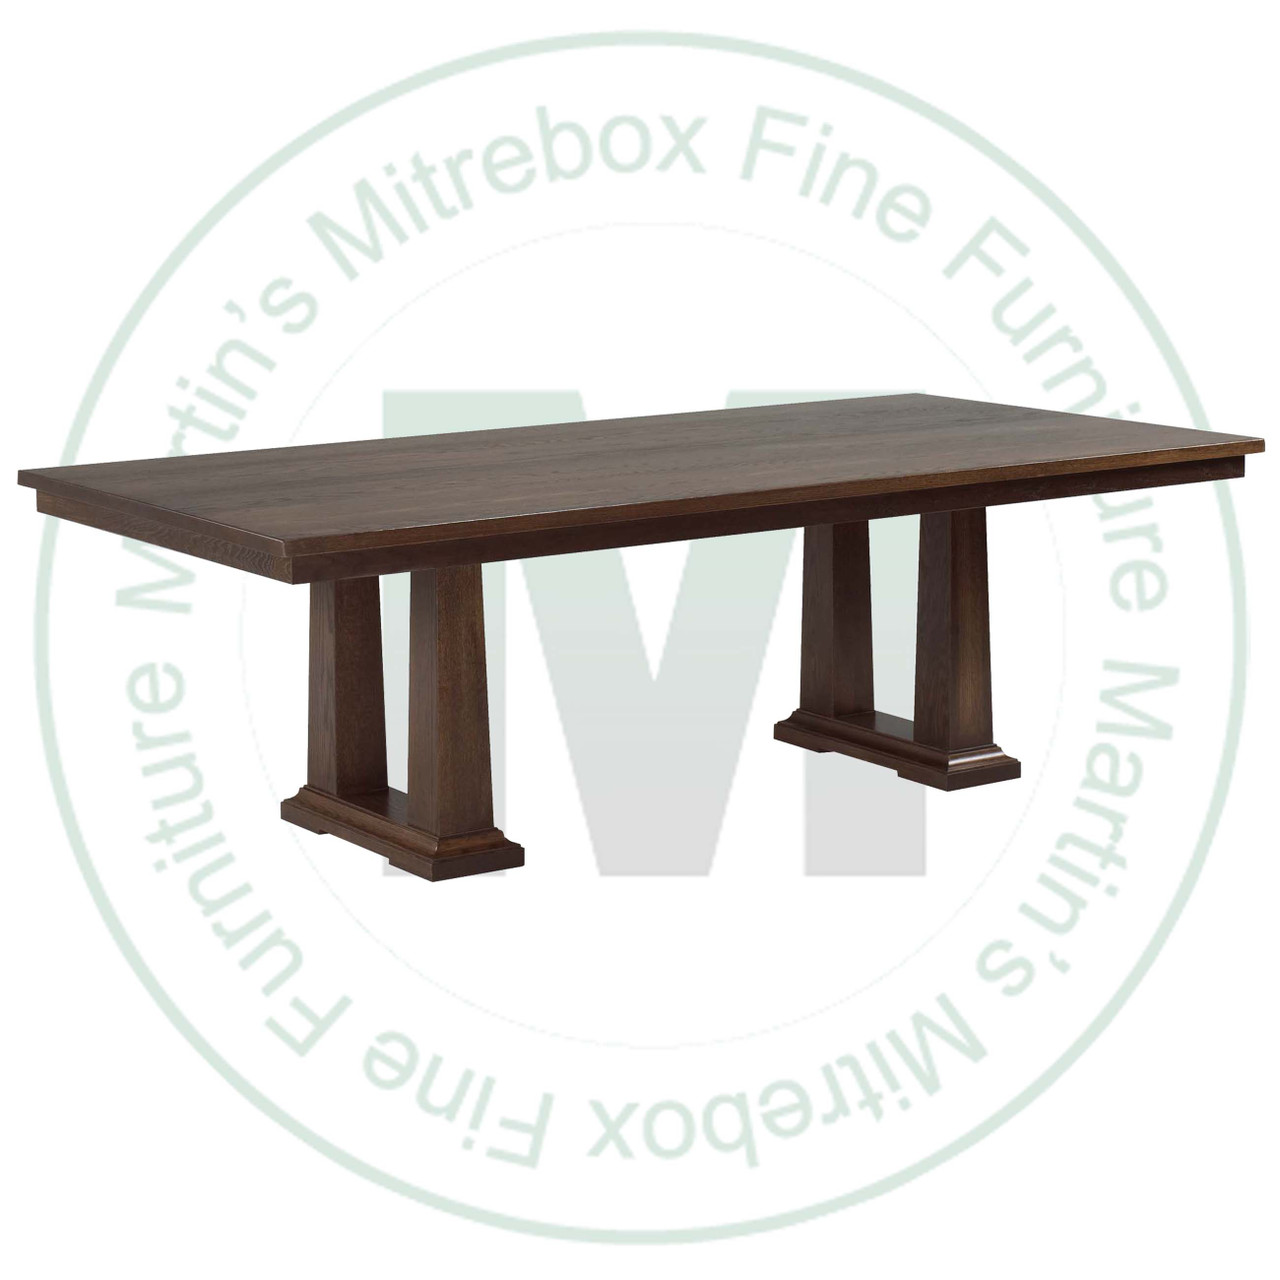 Oak Acropolis Solid Top Double Pedestal Table 42''D x 72''W x 30''H Table Has 1.75'' Thick Top